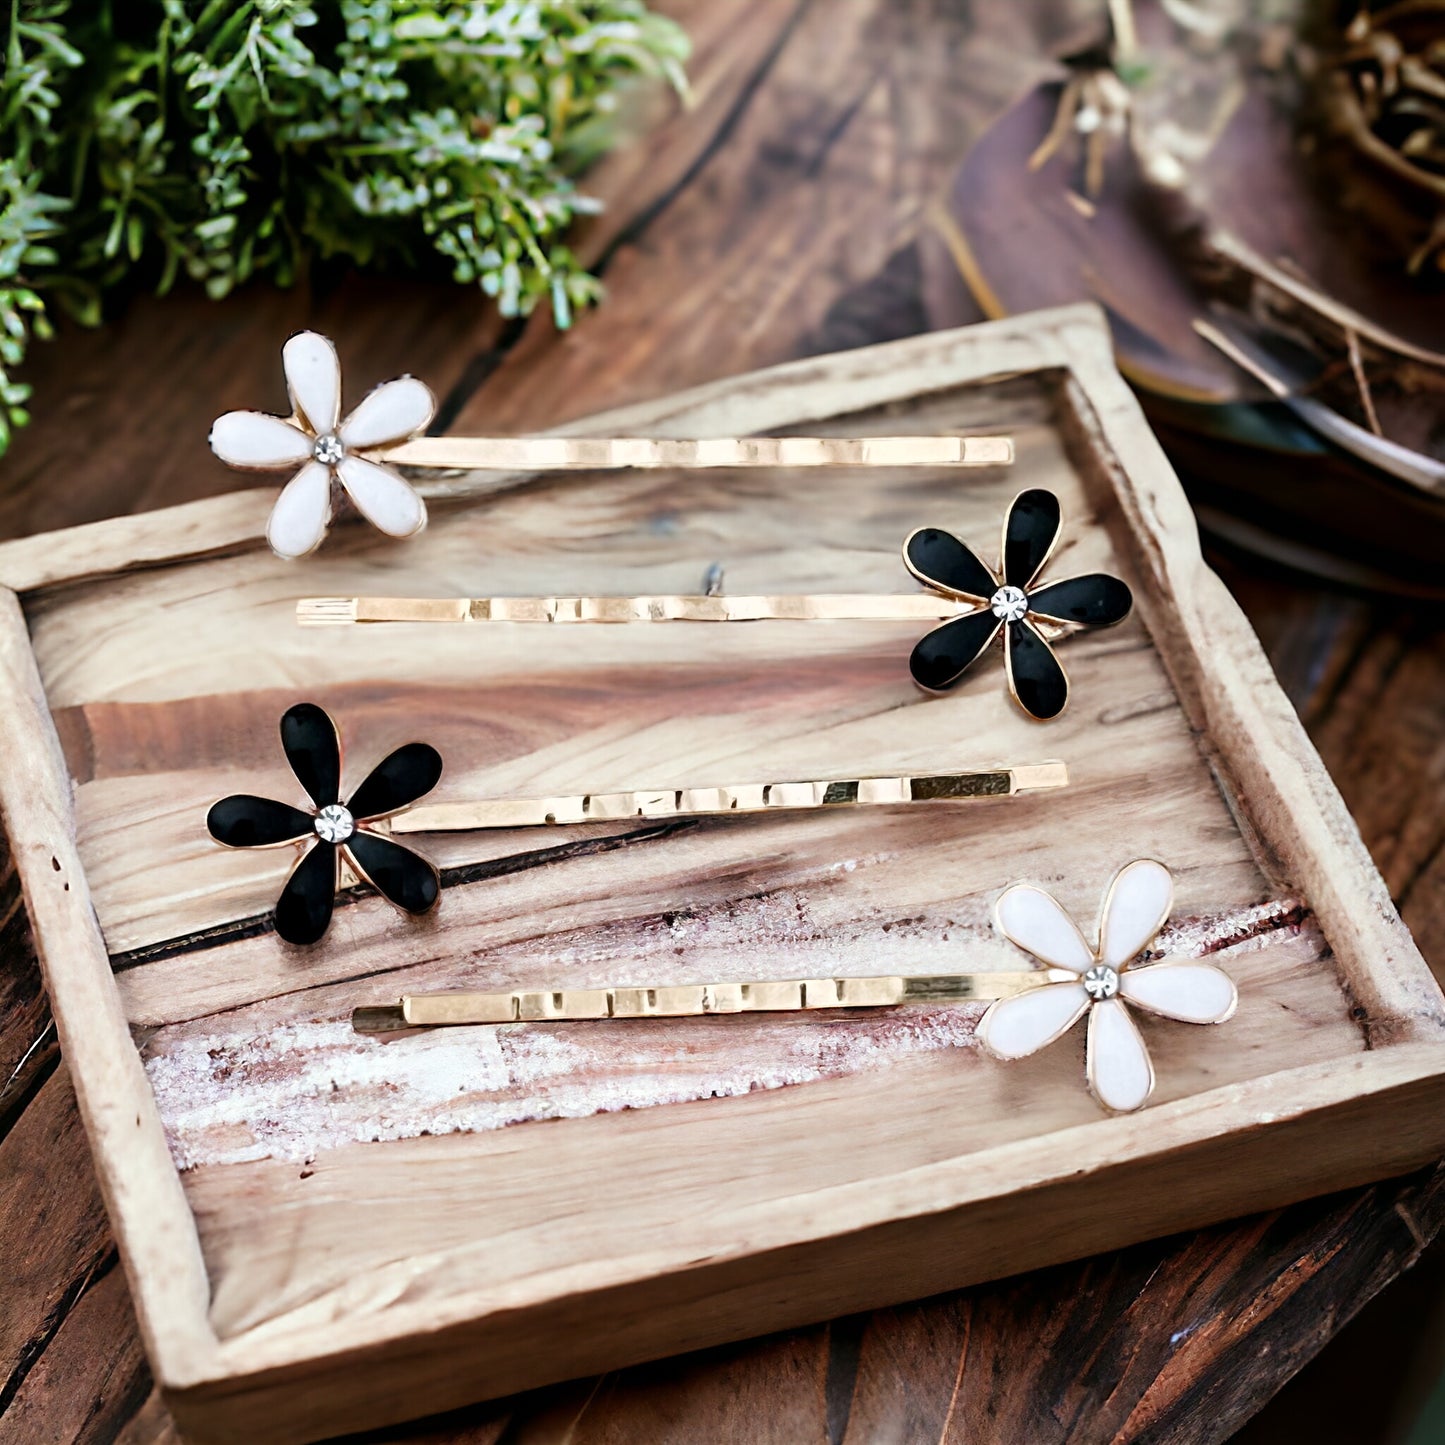 Black & White Enamel Rhinestone Flower Hair Pins - Elegant Floral Hair Accessories